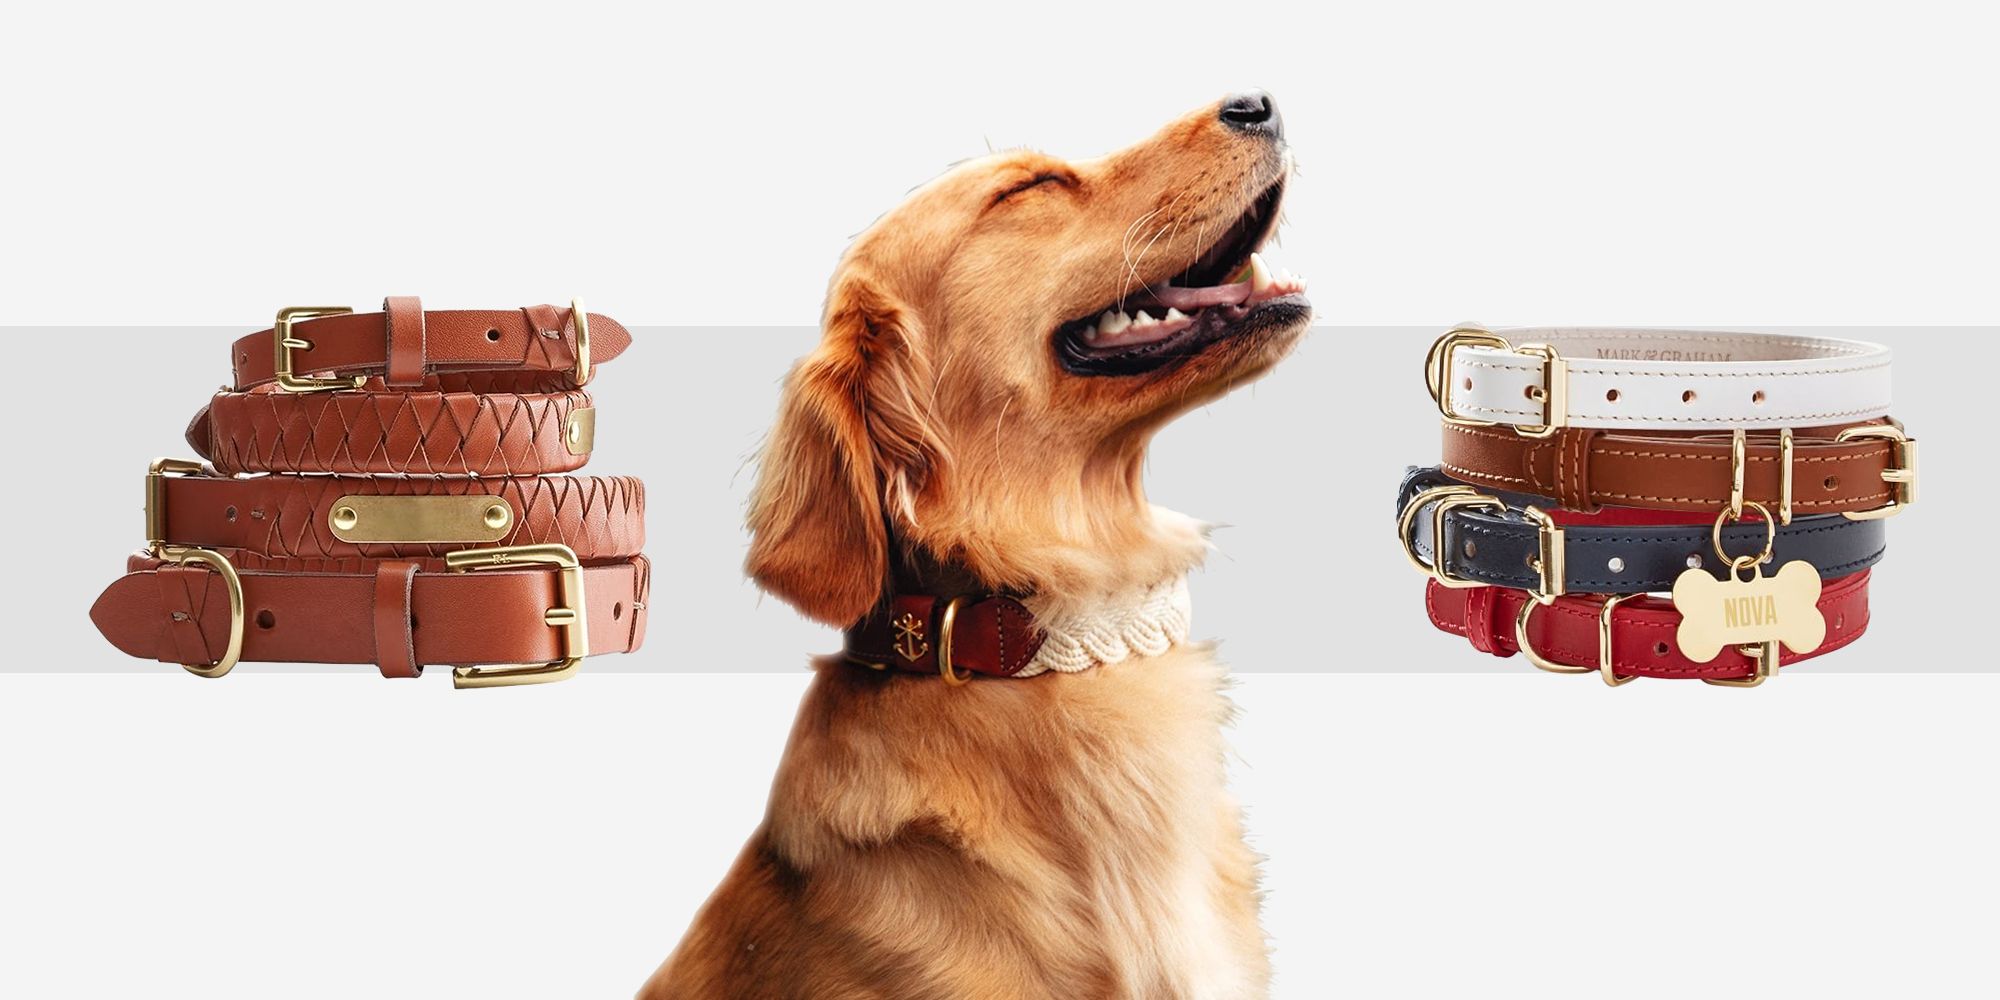 15 Top Preppy Dog Collars - Best Designer Collars for Fancy Dogs